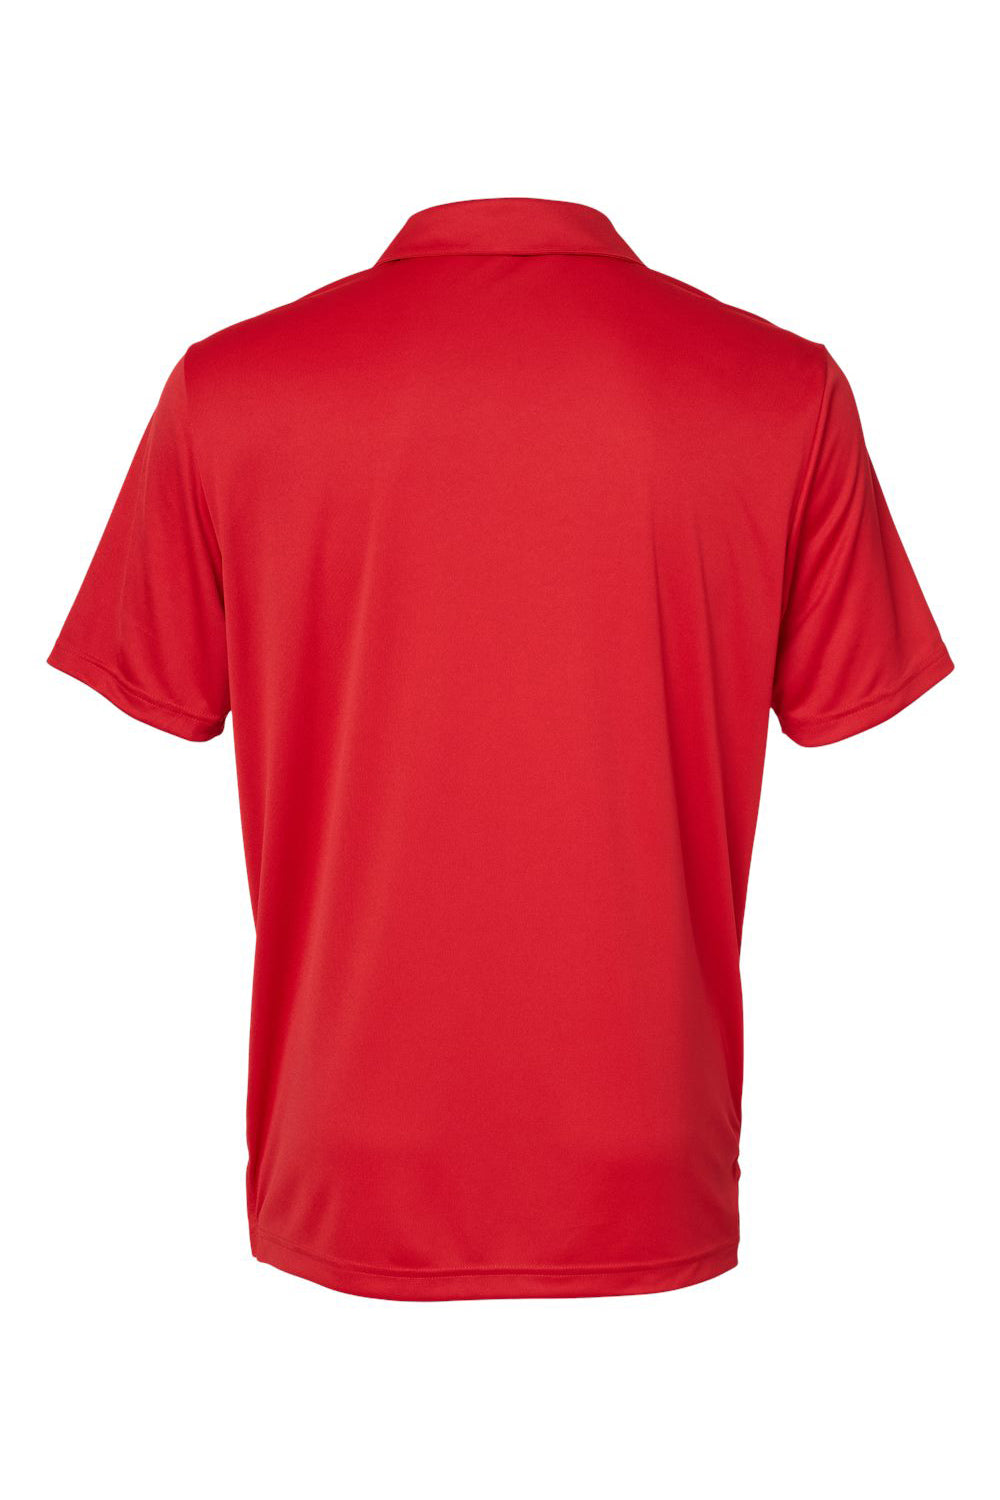 Adidas A324 Mens 3 Stripes Short Sleeve Polo Shirt Collegiate Red/Black Flat Back